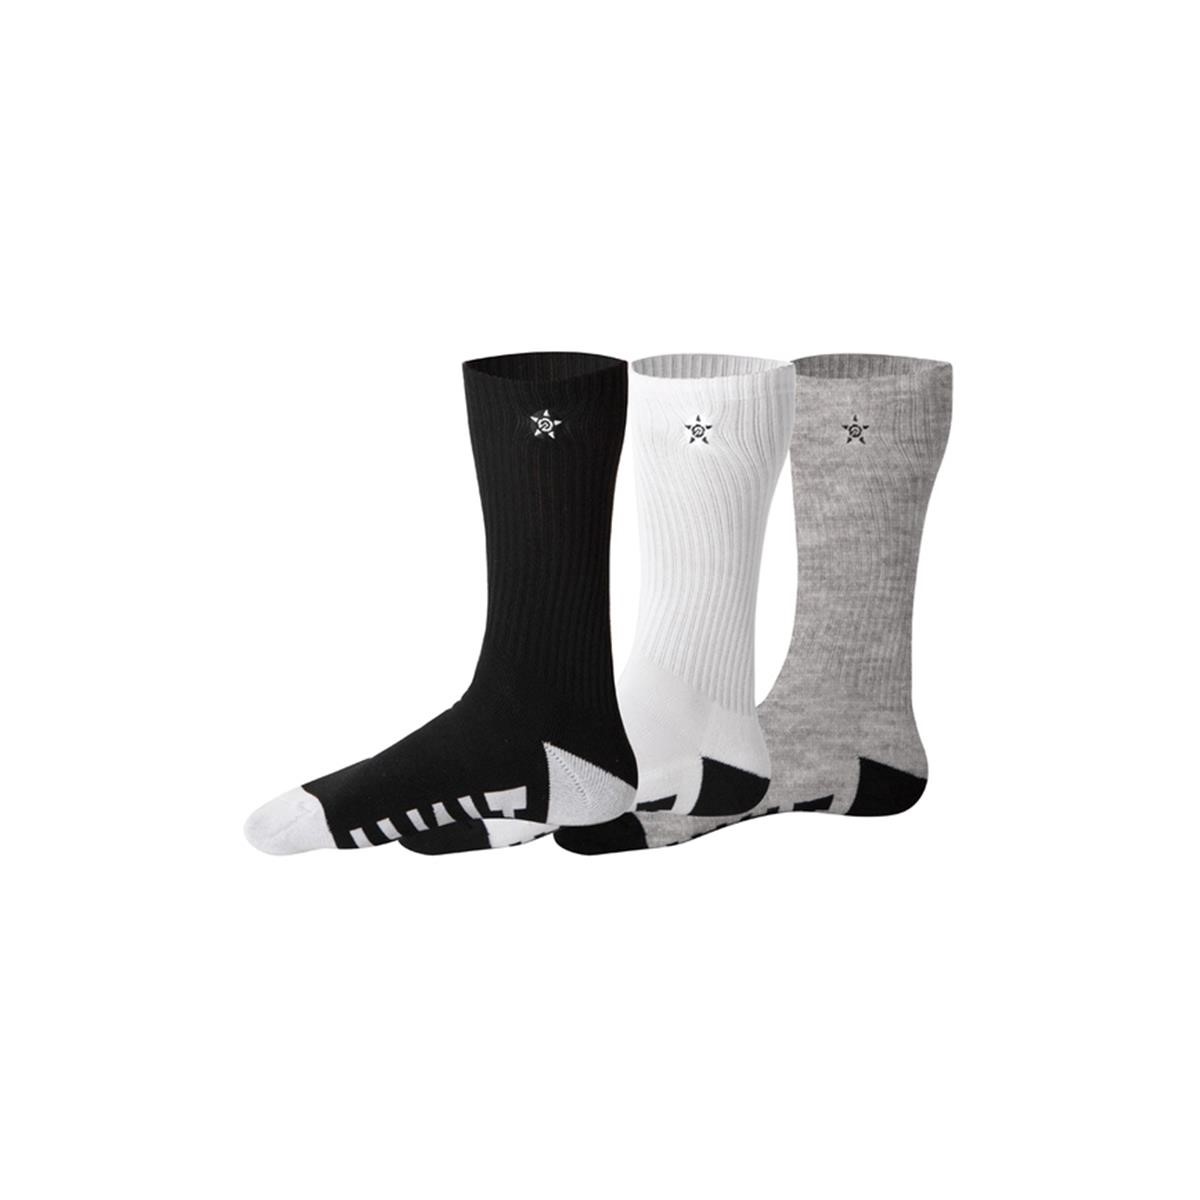 Unit Socks Hilux 3er Pack, Multi